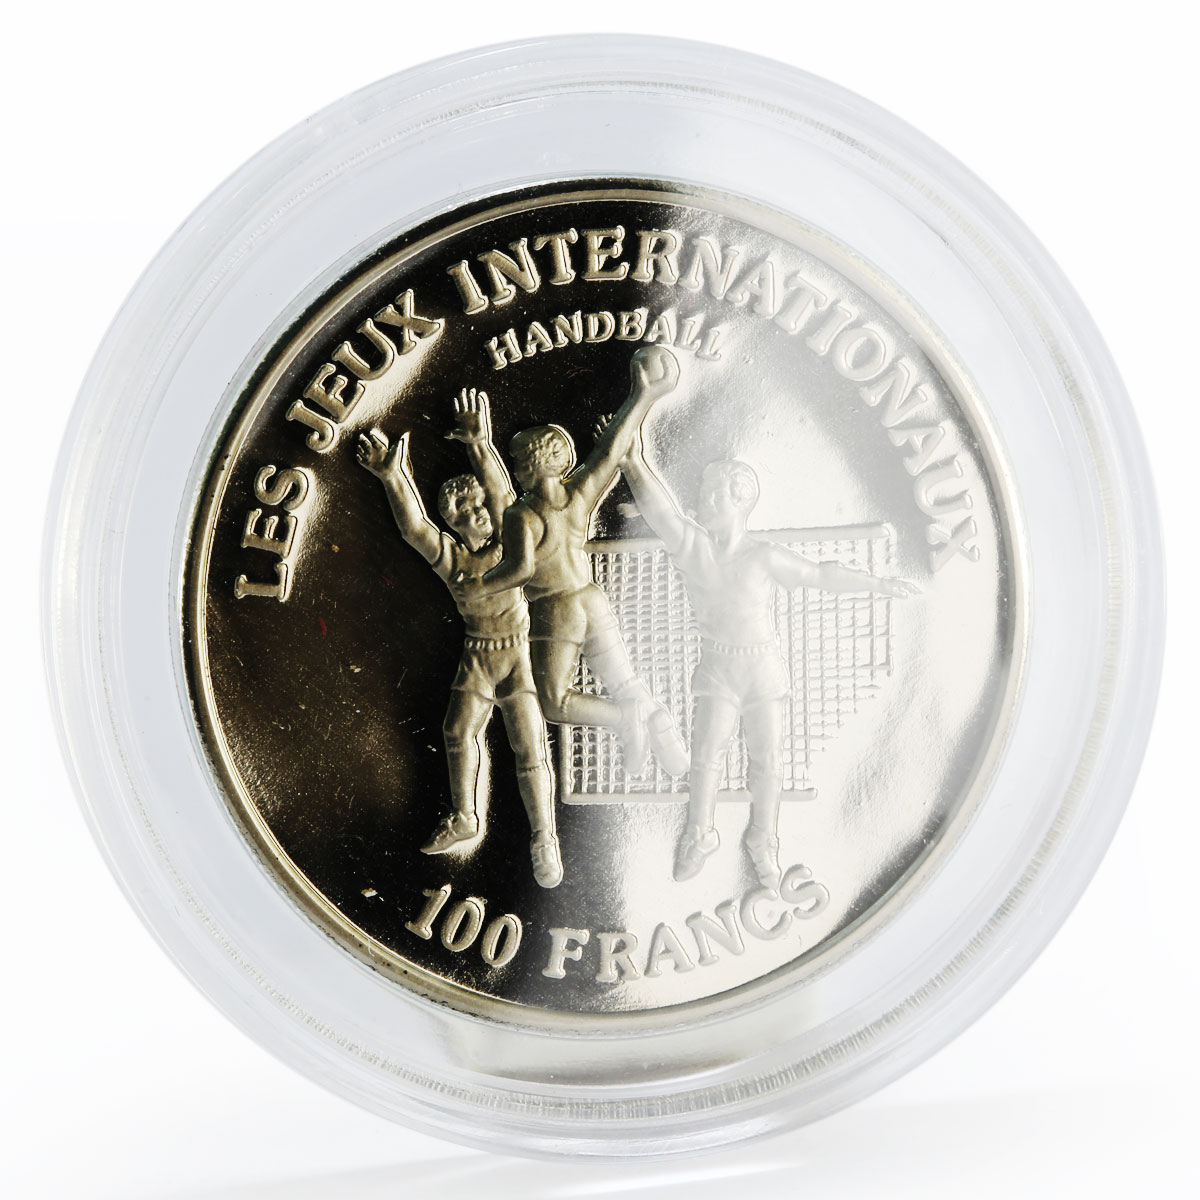 Congo 100 francs International Games series Handball proof nickel coin 1984